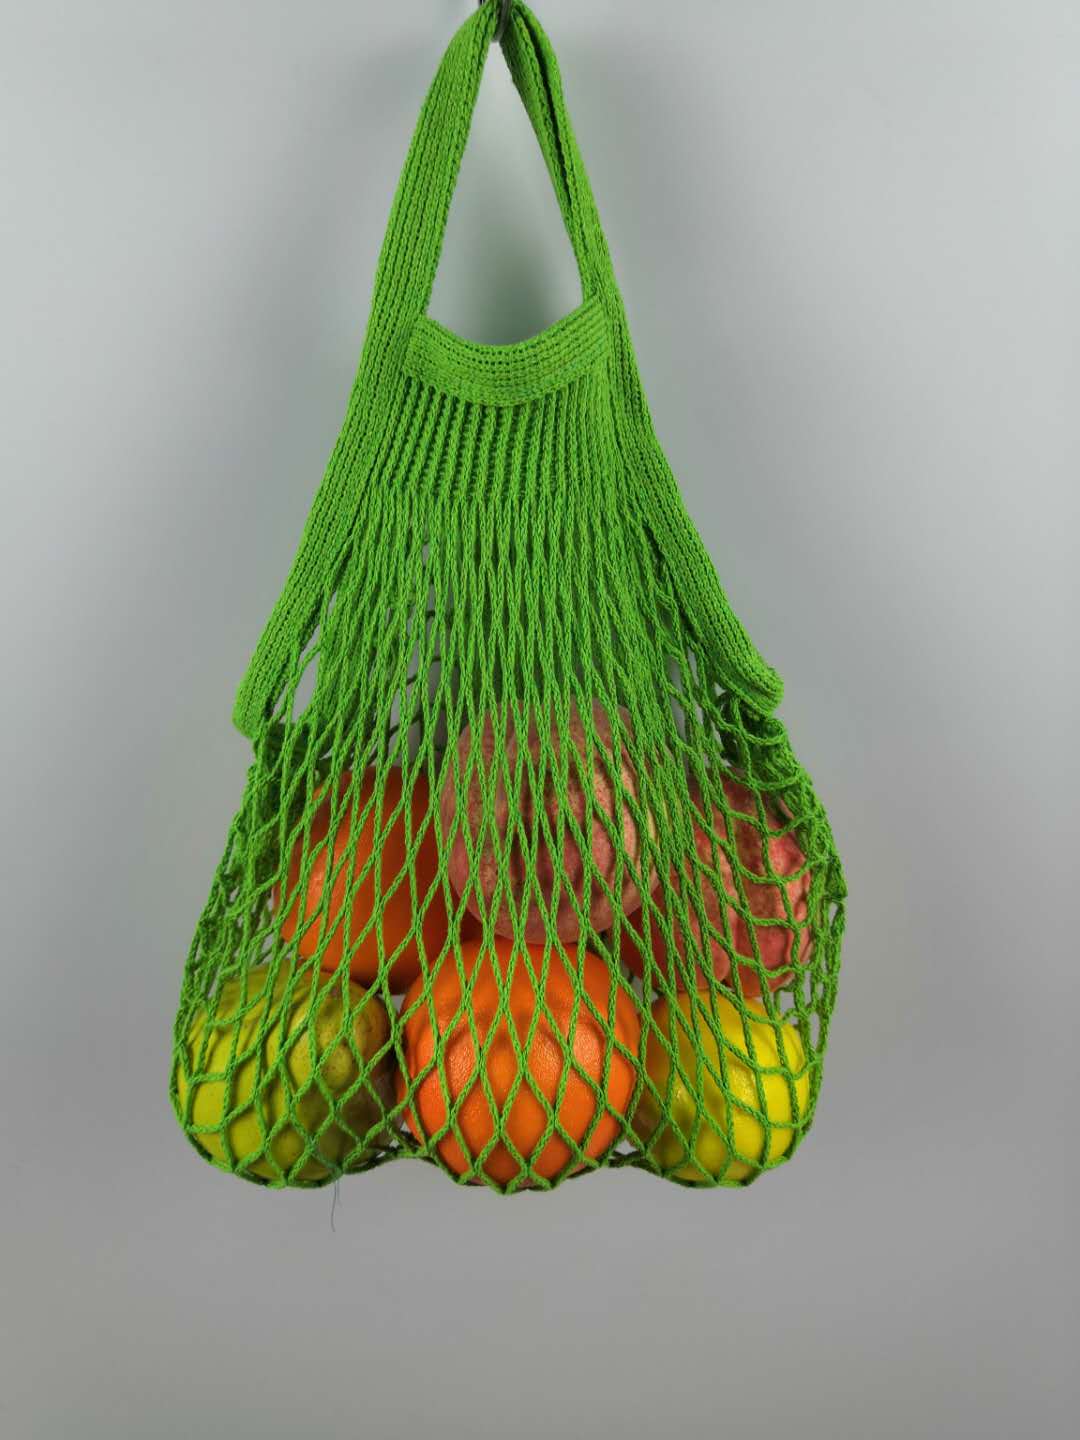 French net bag